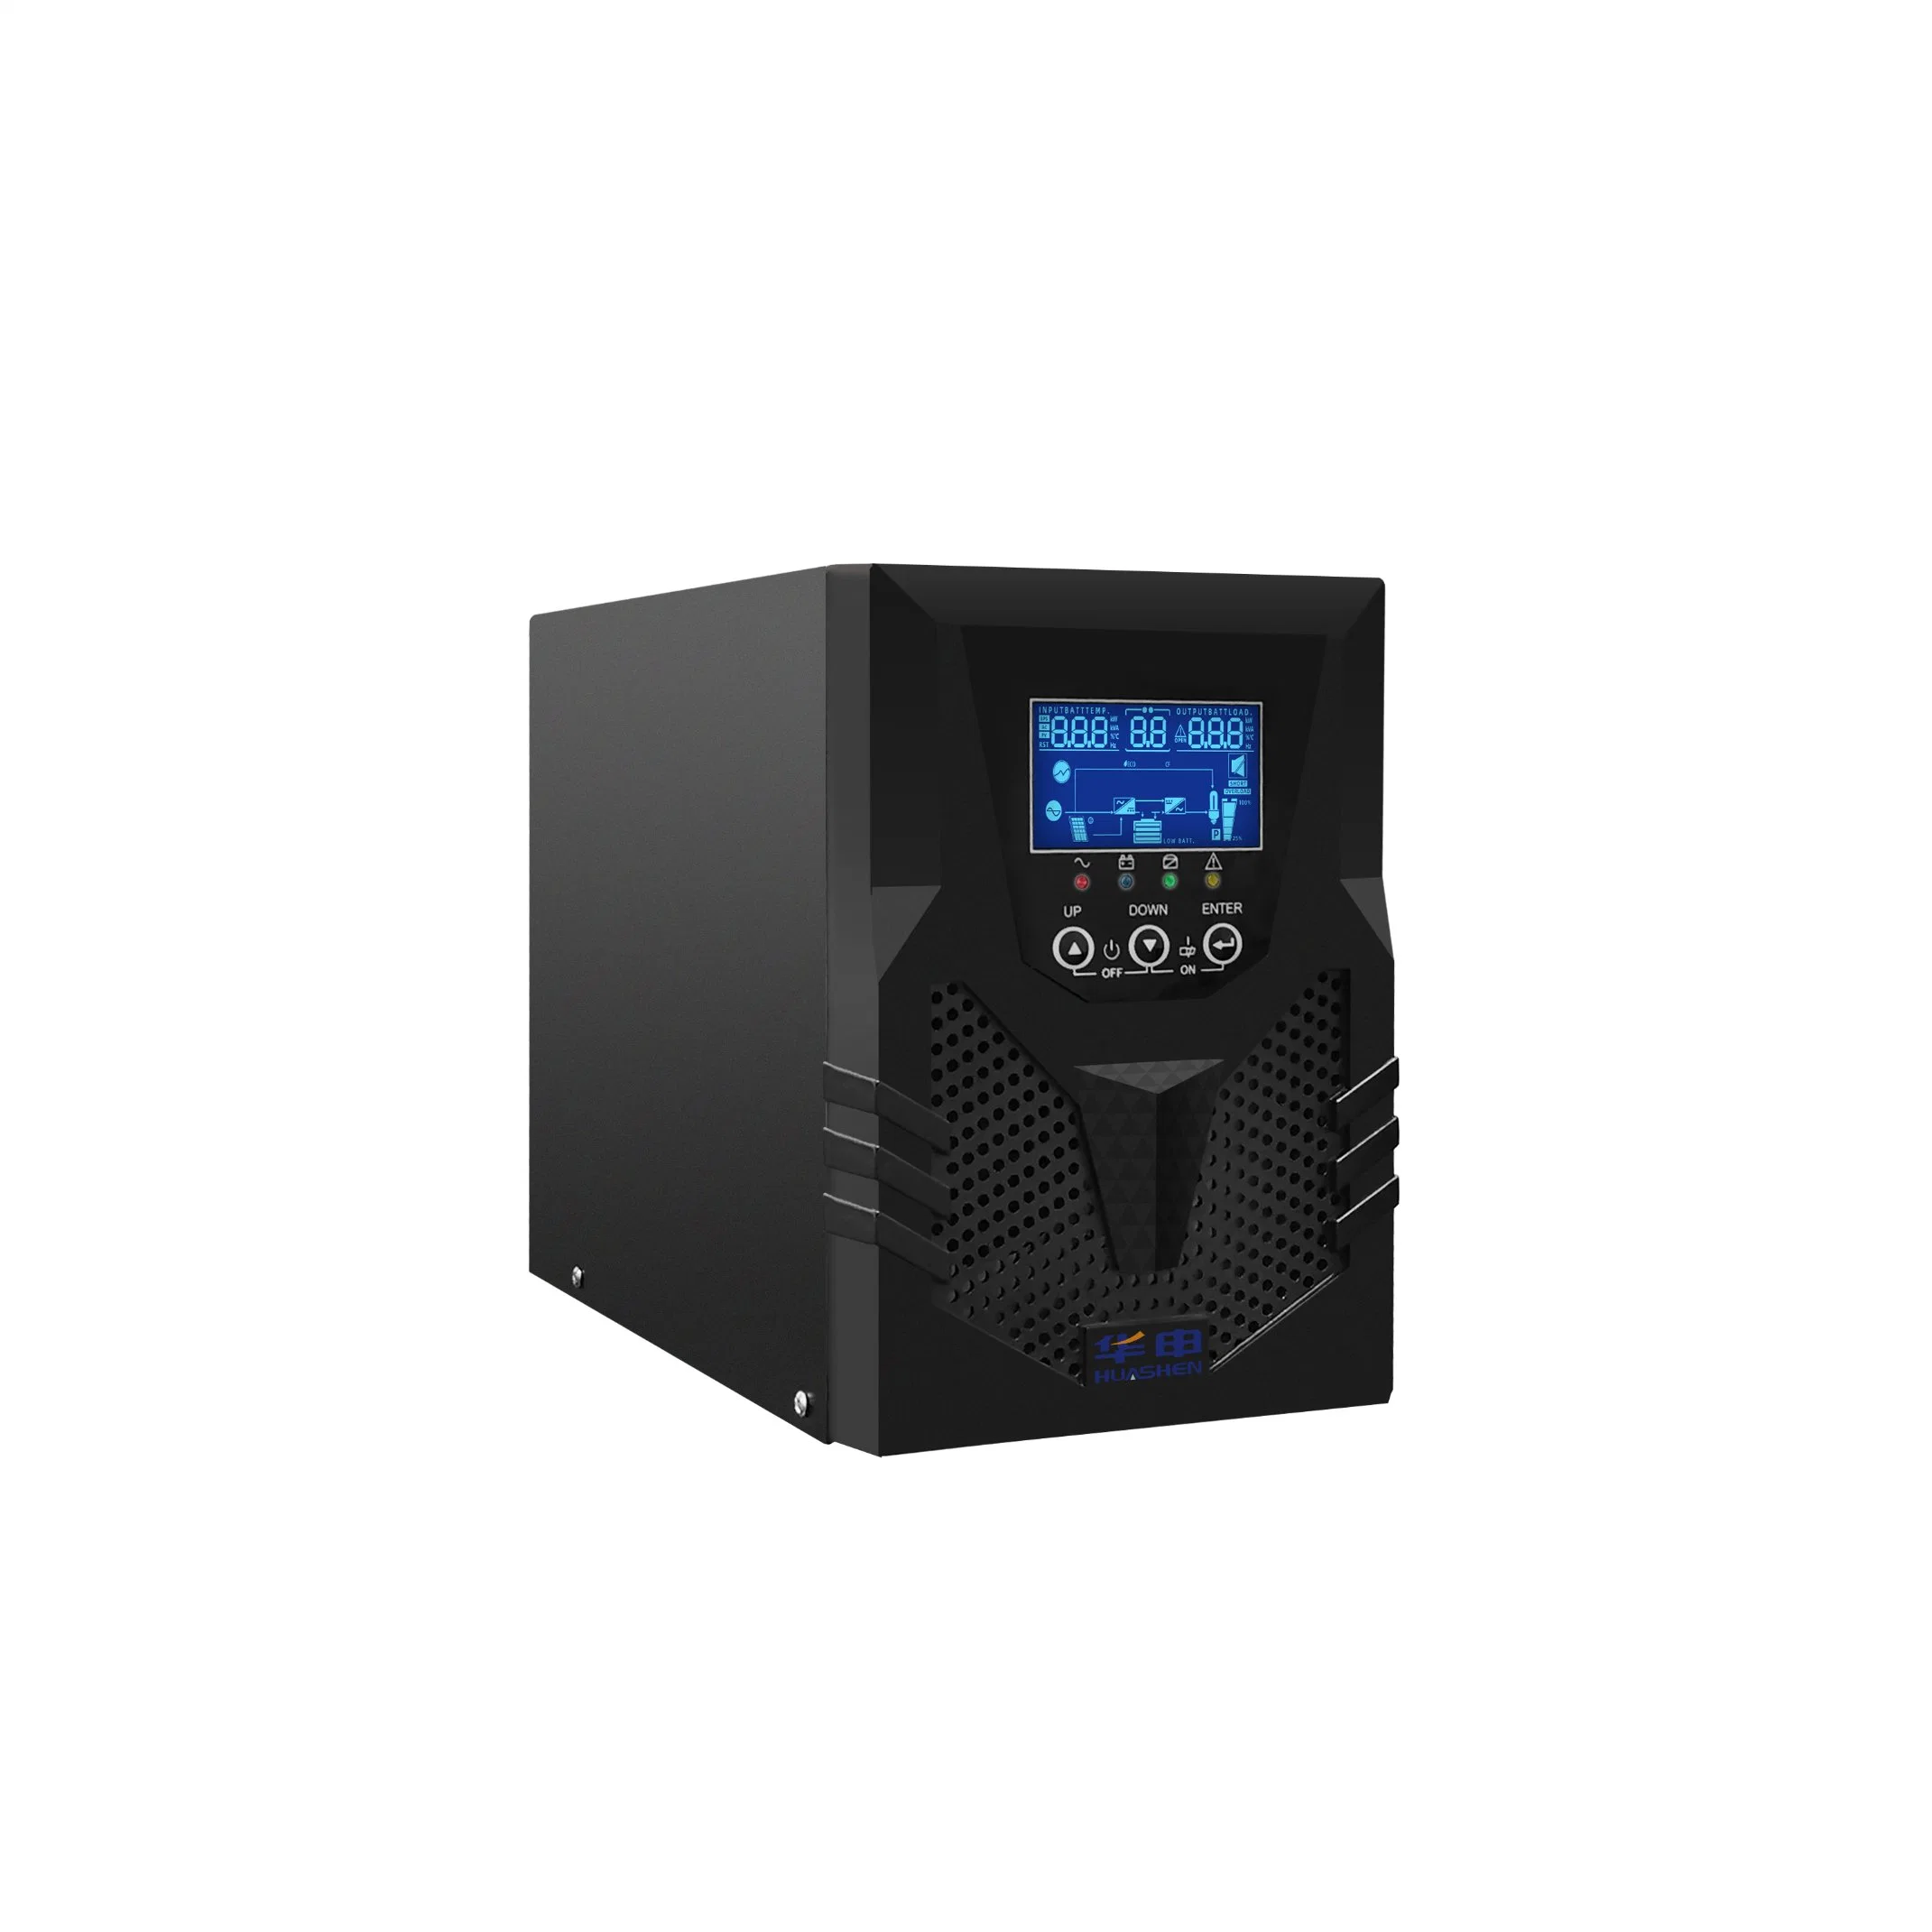 Backup UPS Power Supply System 400va/600va/800va/1200va/1500va/2000va